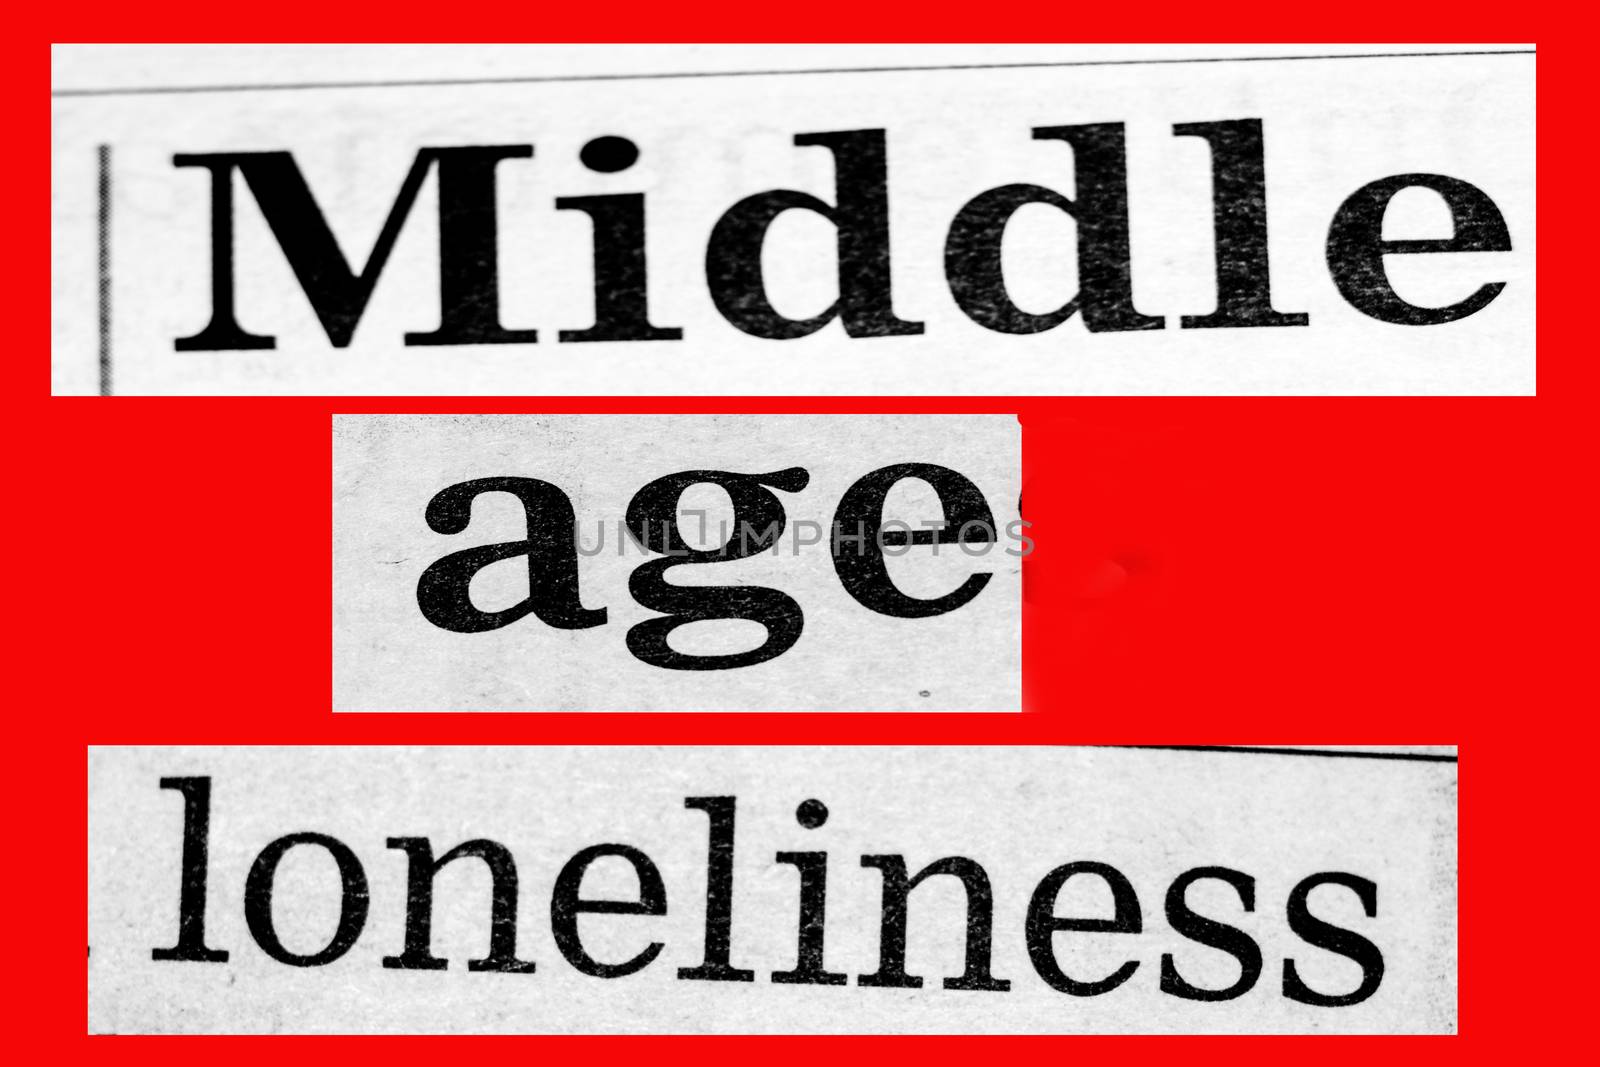 Distressed newspaper headline reading against loneliness UK